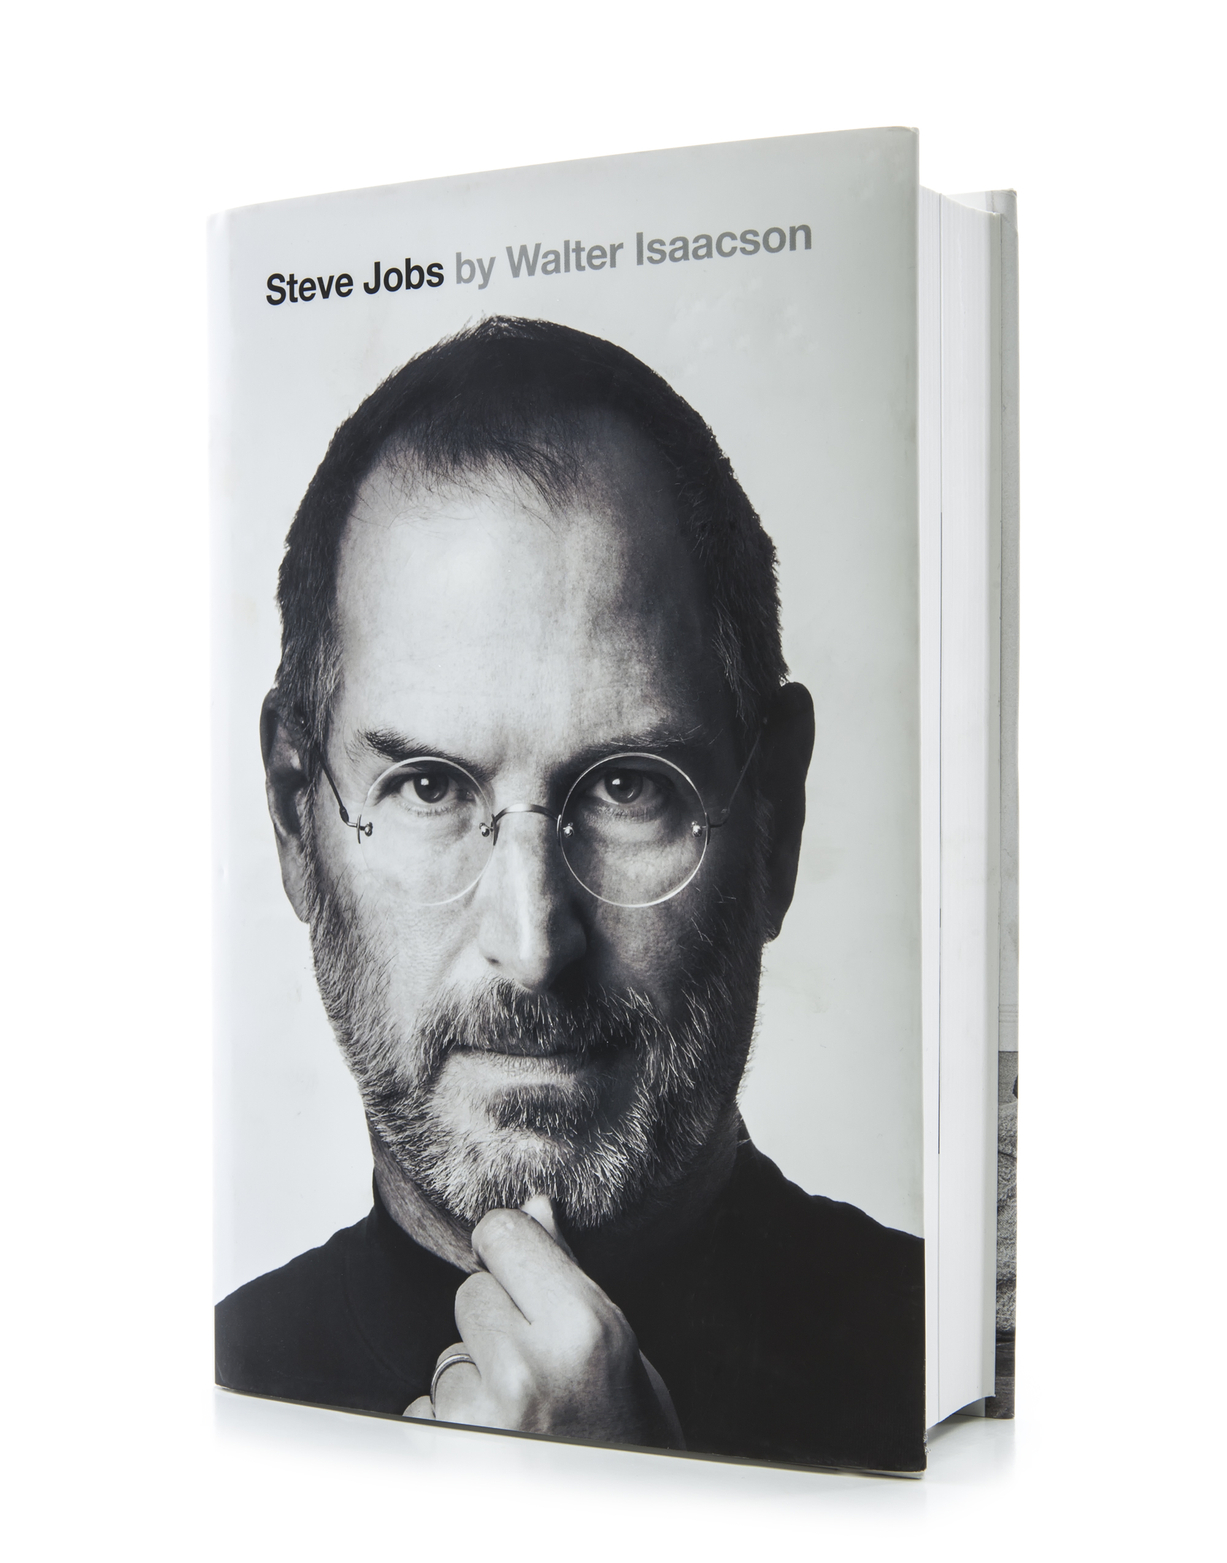 Swindon, United Kingdom - December 25, 2011: Steve Jobs  Biography" by Walter Isaacson"